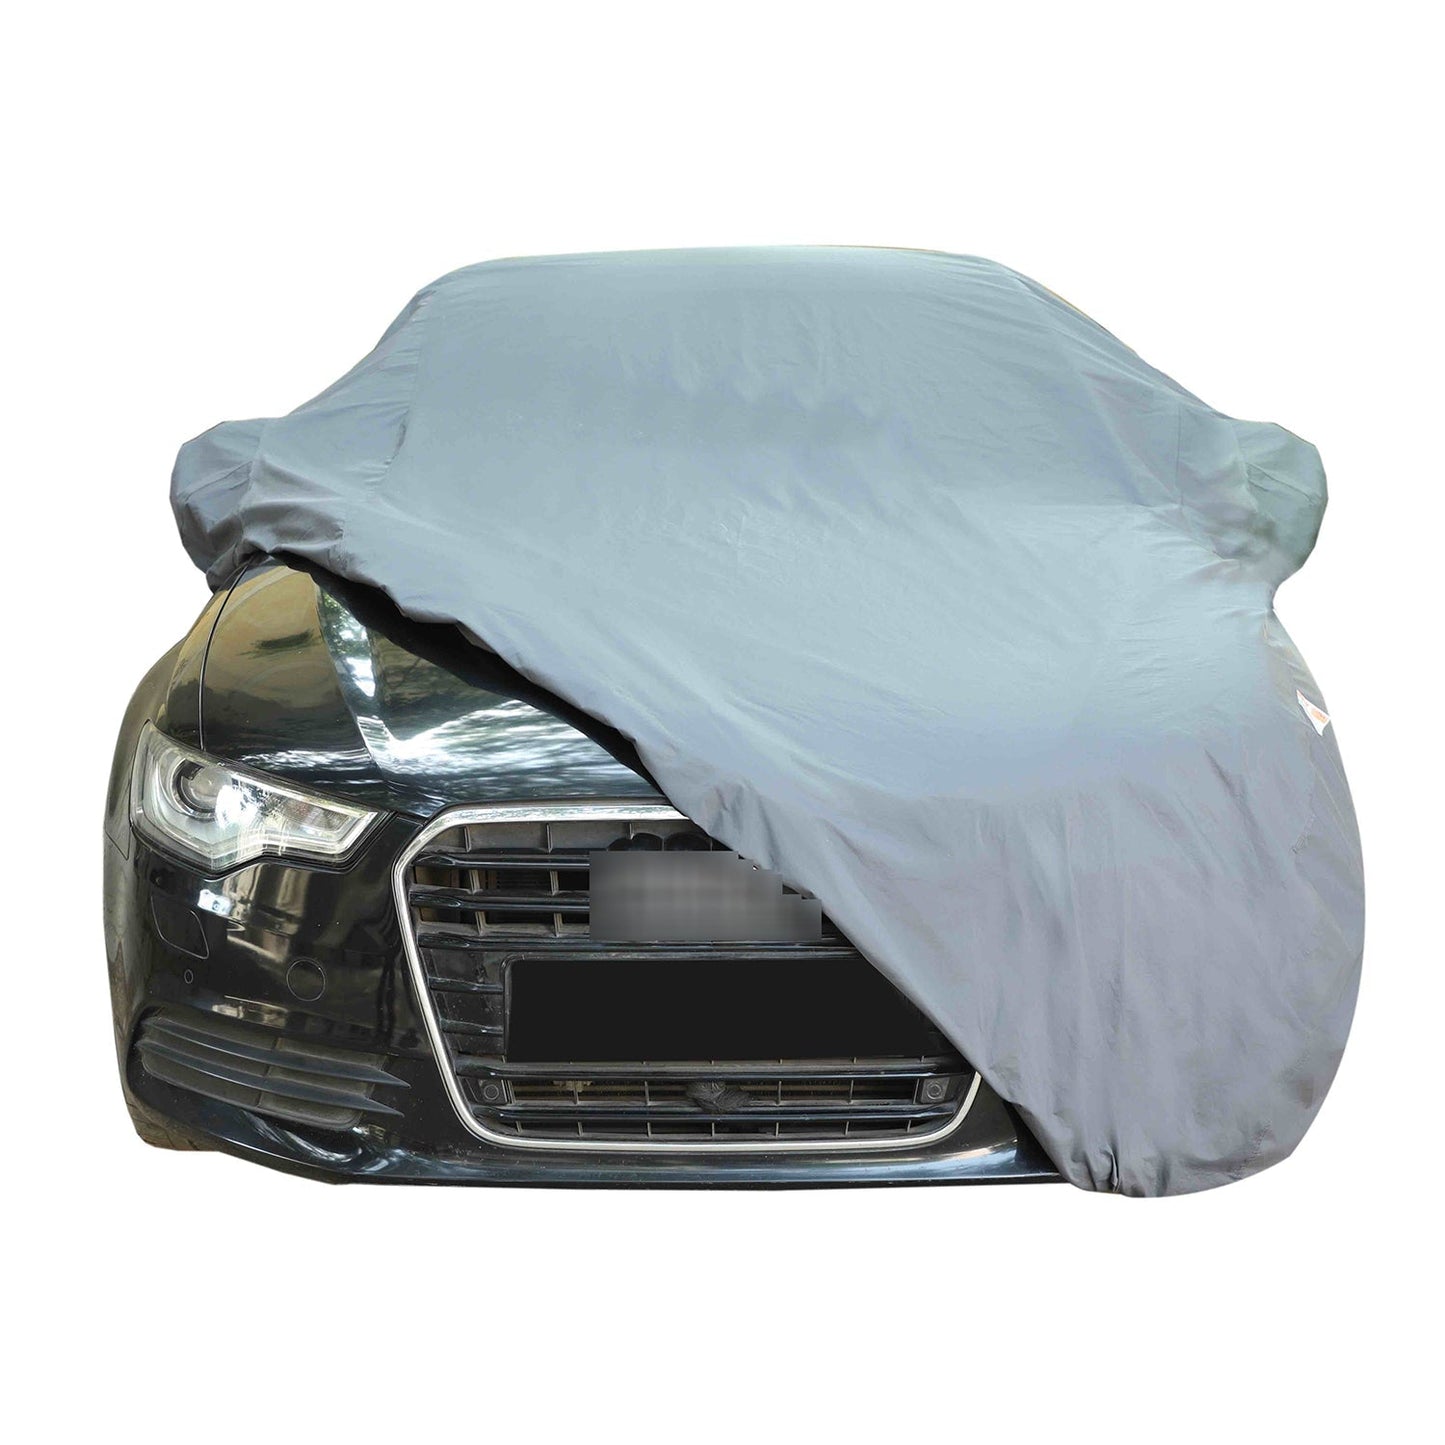 Oshotto Dark Grey 100% Anti Reflective, dustproof and Water Proof Car Body Cover with Mirror Pockets For Maruti Suzuki Alto 800